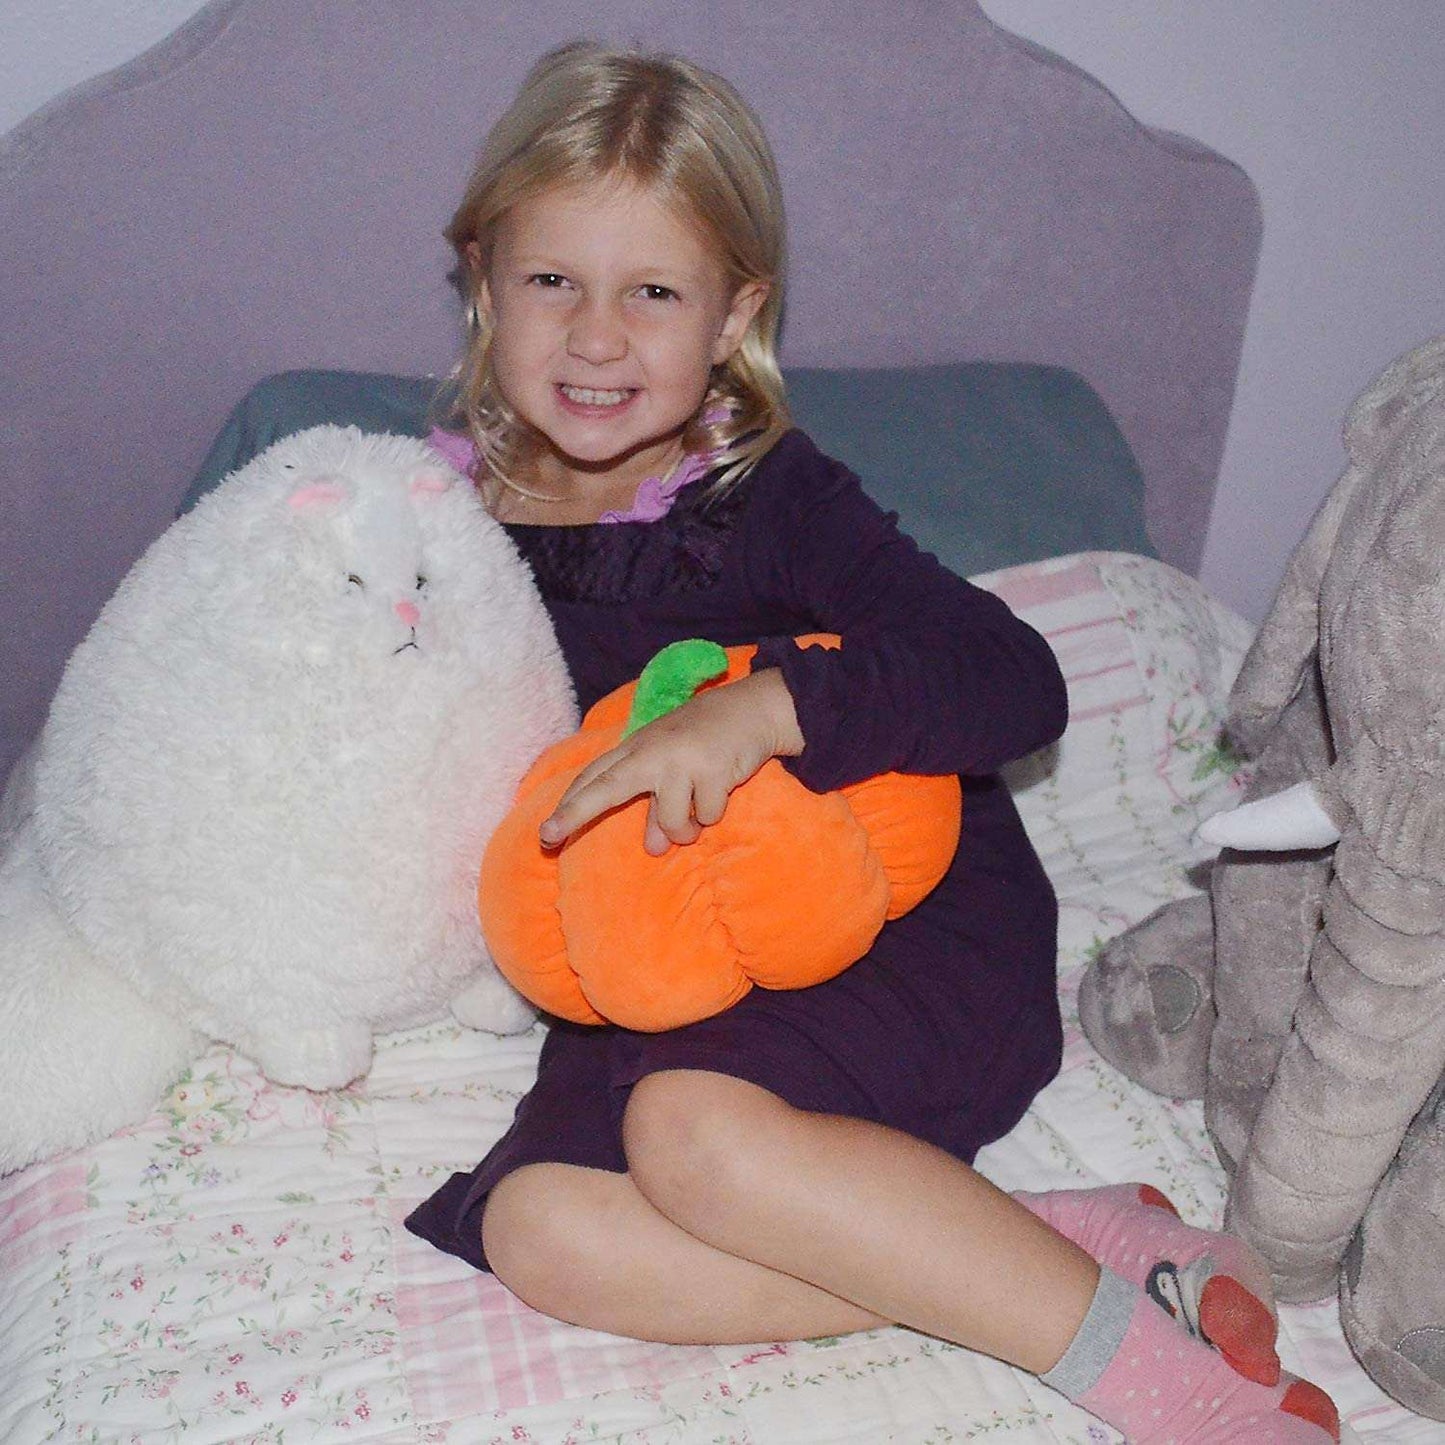 Aixini Halloween Decorative Pillow, Stuffed Pumpkin Fluffy Pumpkin Plush Toy